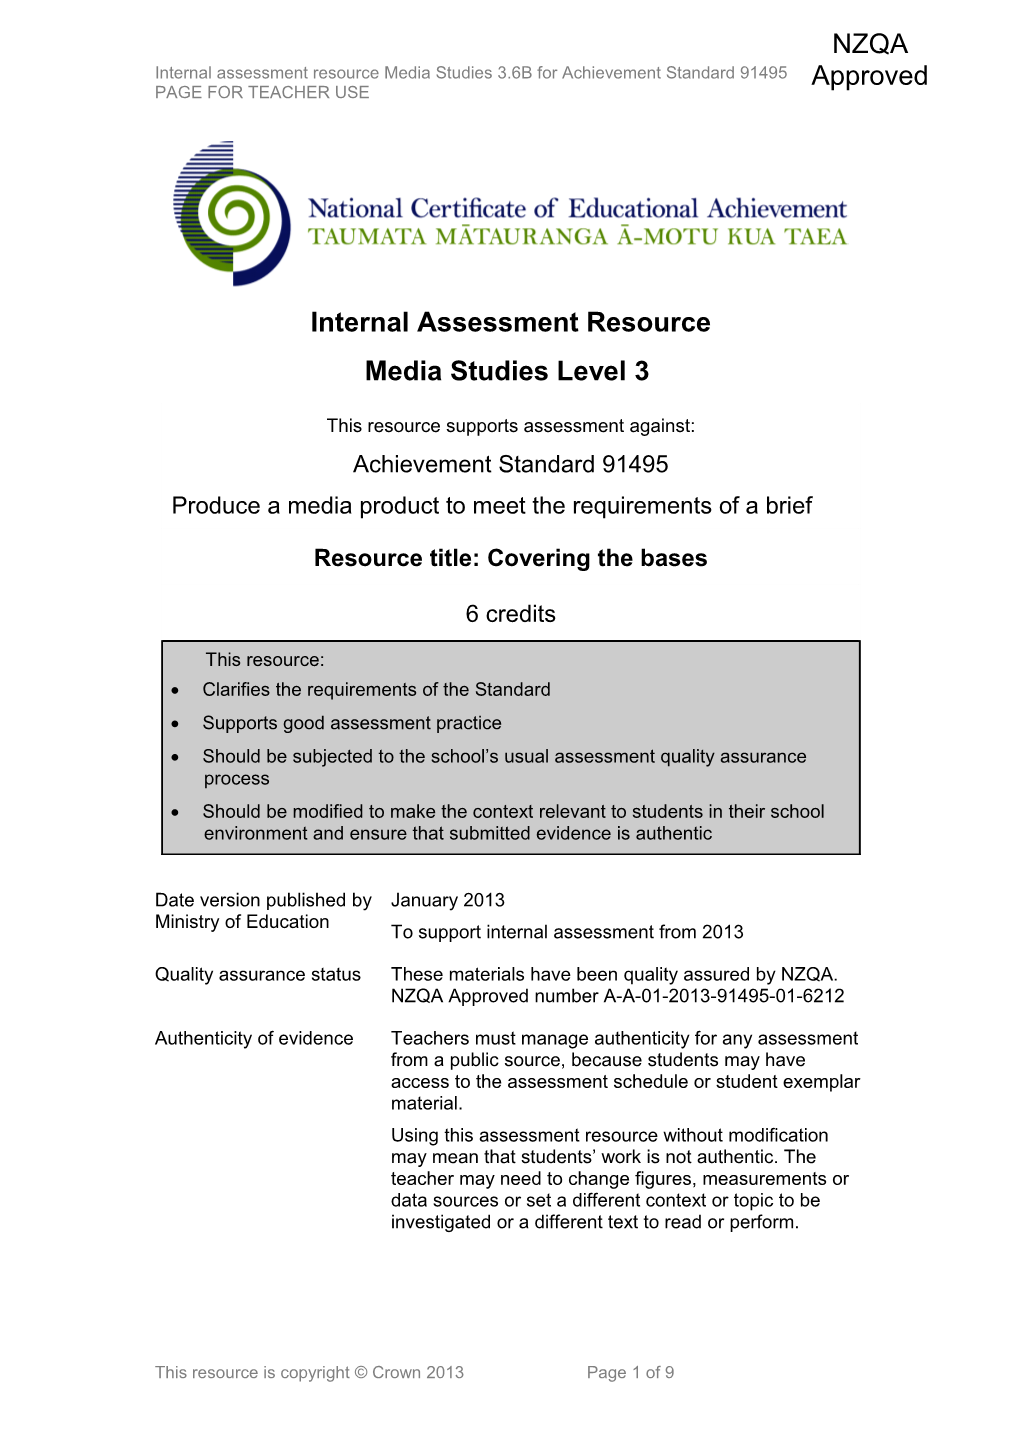 Level 3 Media Studies Internal Assessment Resource